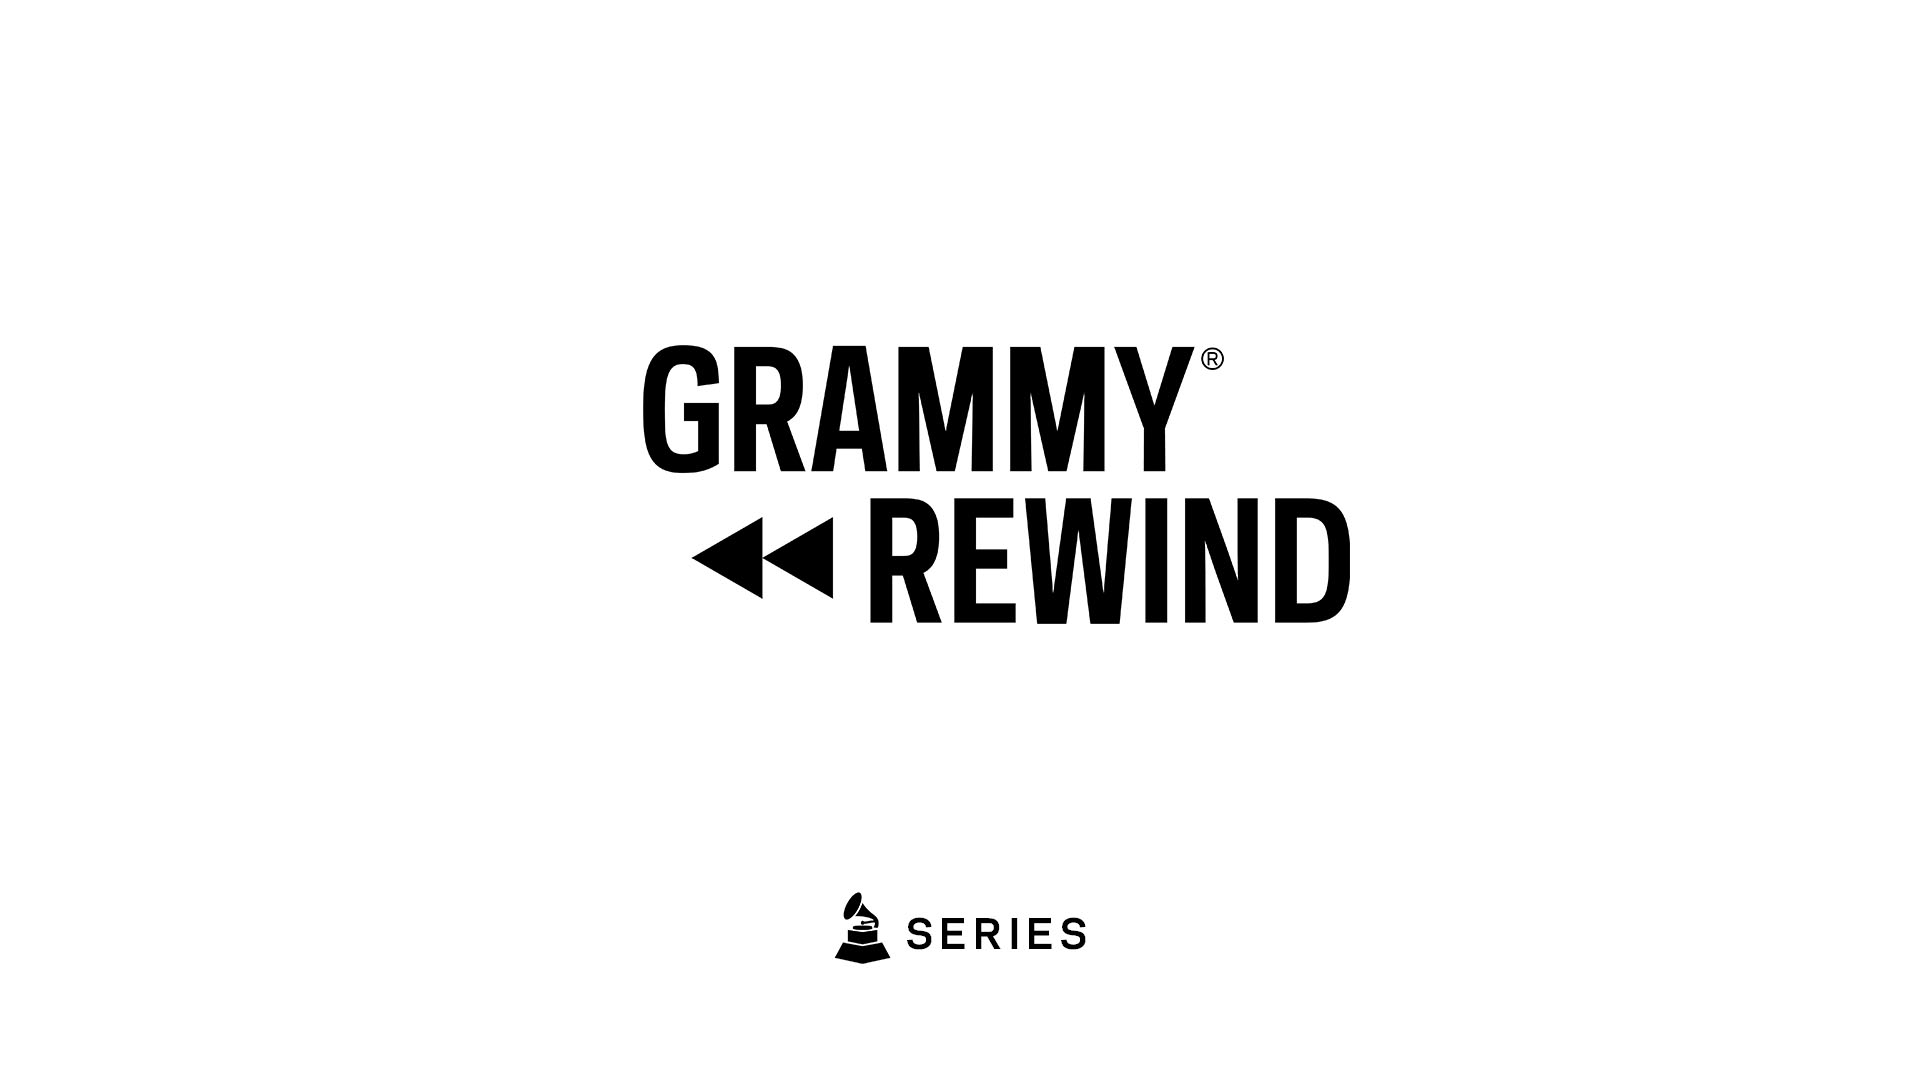 Watch An Ironically Speechless Bonnie Raitt Win A GRAMMY For "Something To Talk About" In 1992 | GRAMMY Rewind